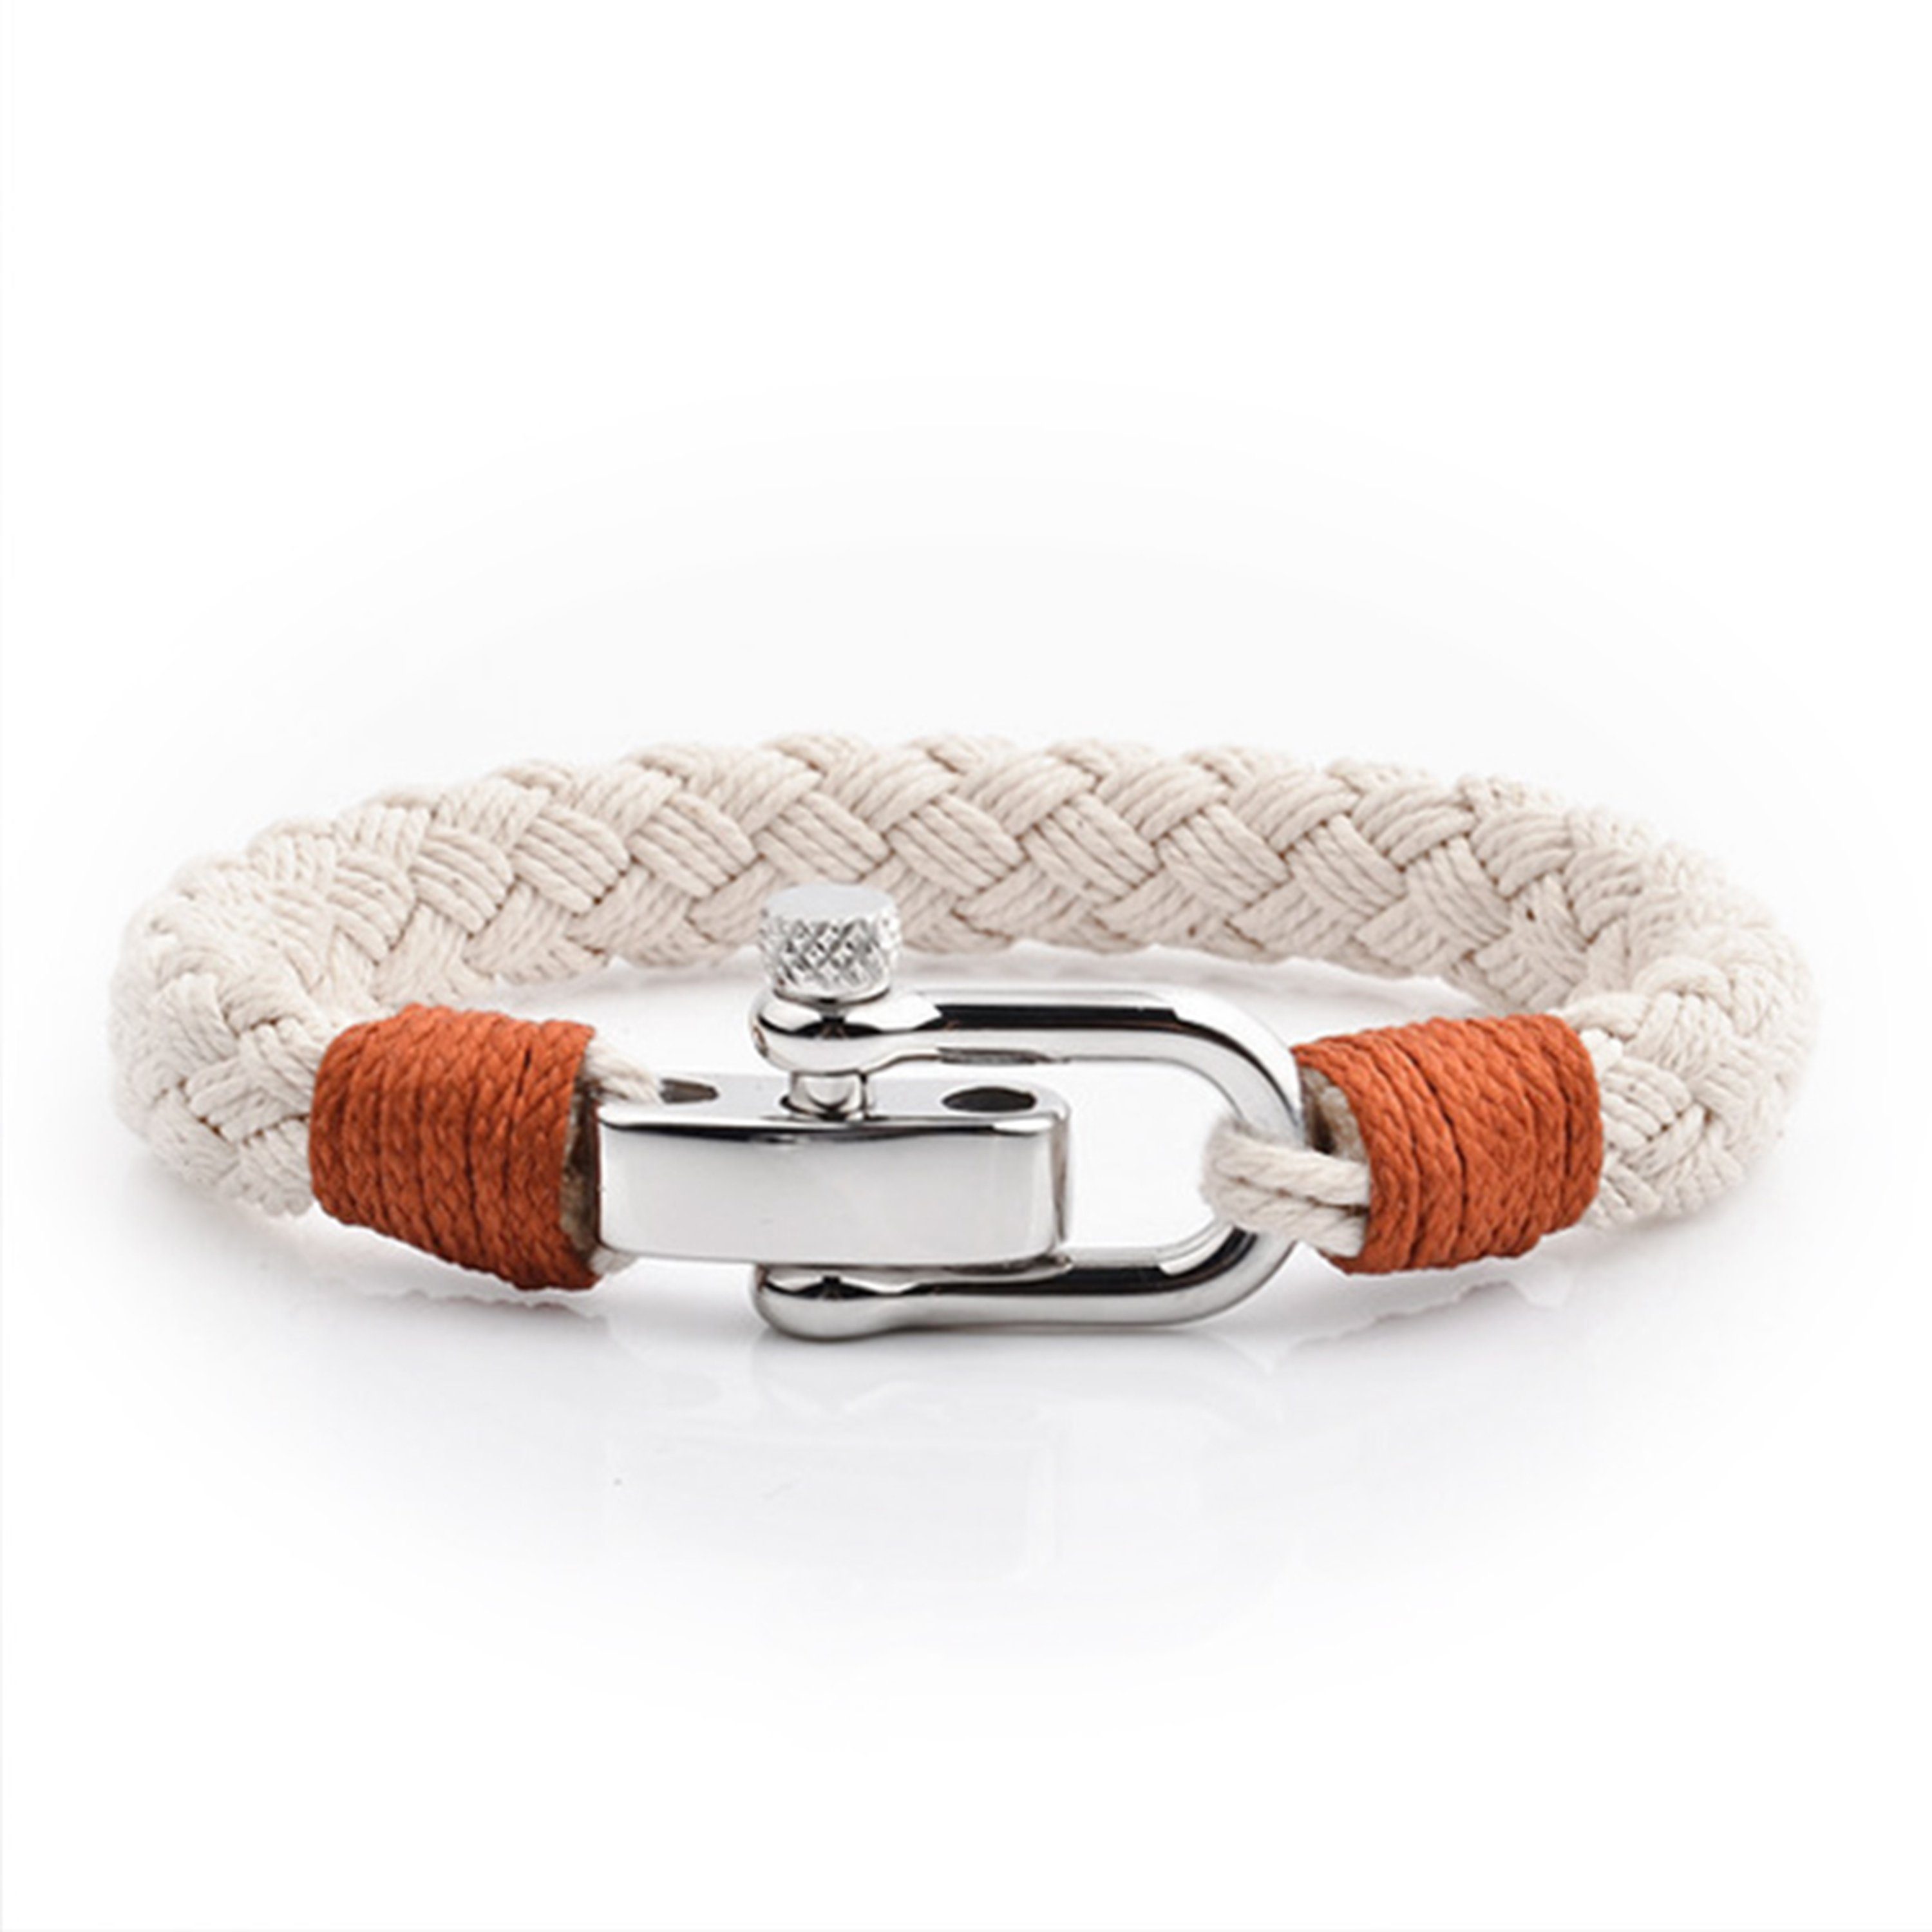 Segeltau (Edelstahl, Maritime aus verschluss nautics, Armband Schäckel Armband Segeltau, handgefertigt) UNIQAL.de Casual Style, "RONA"